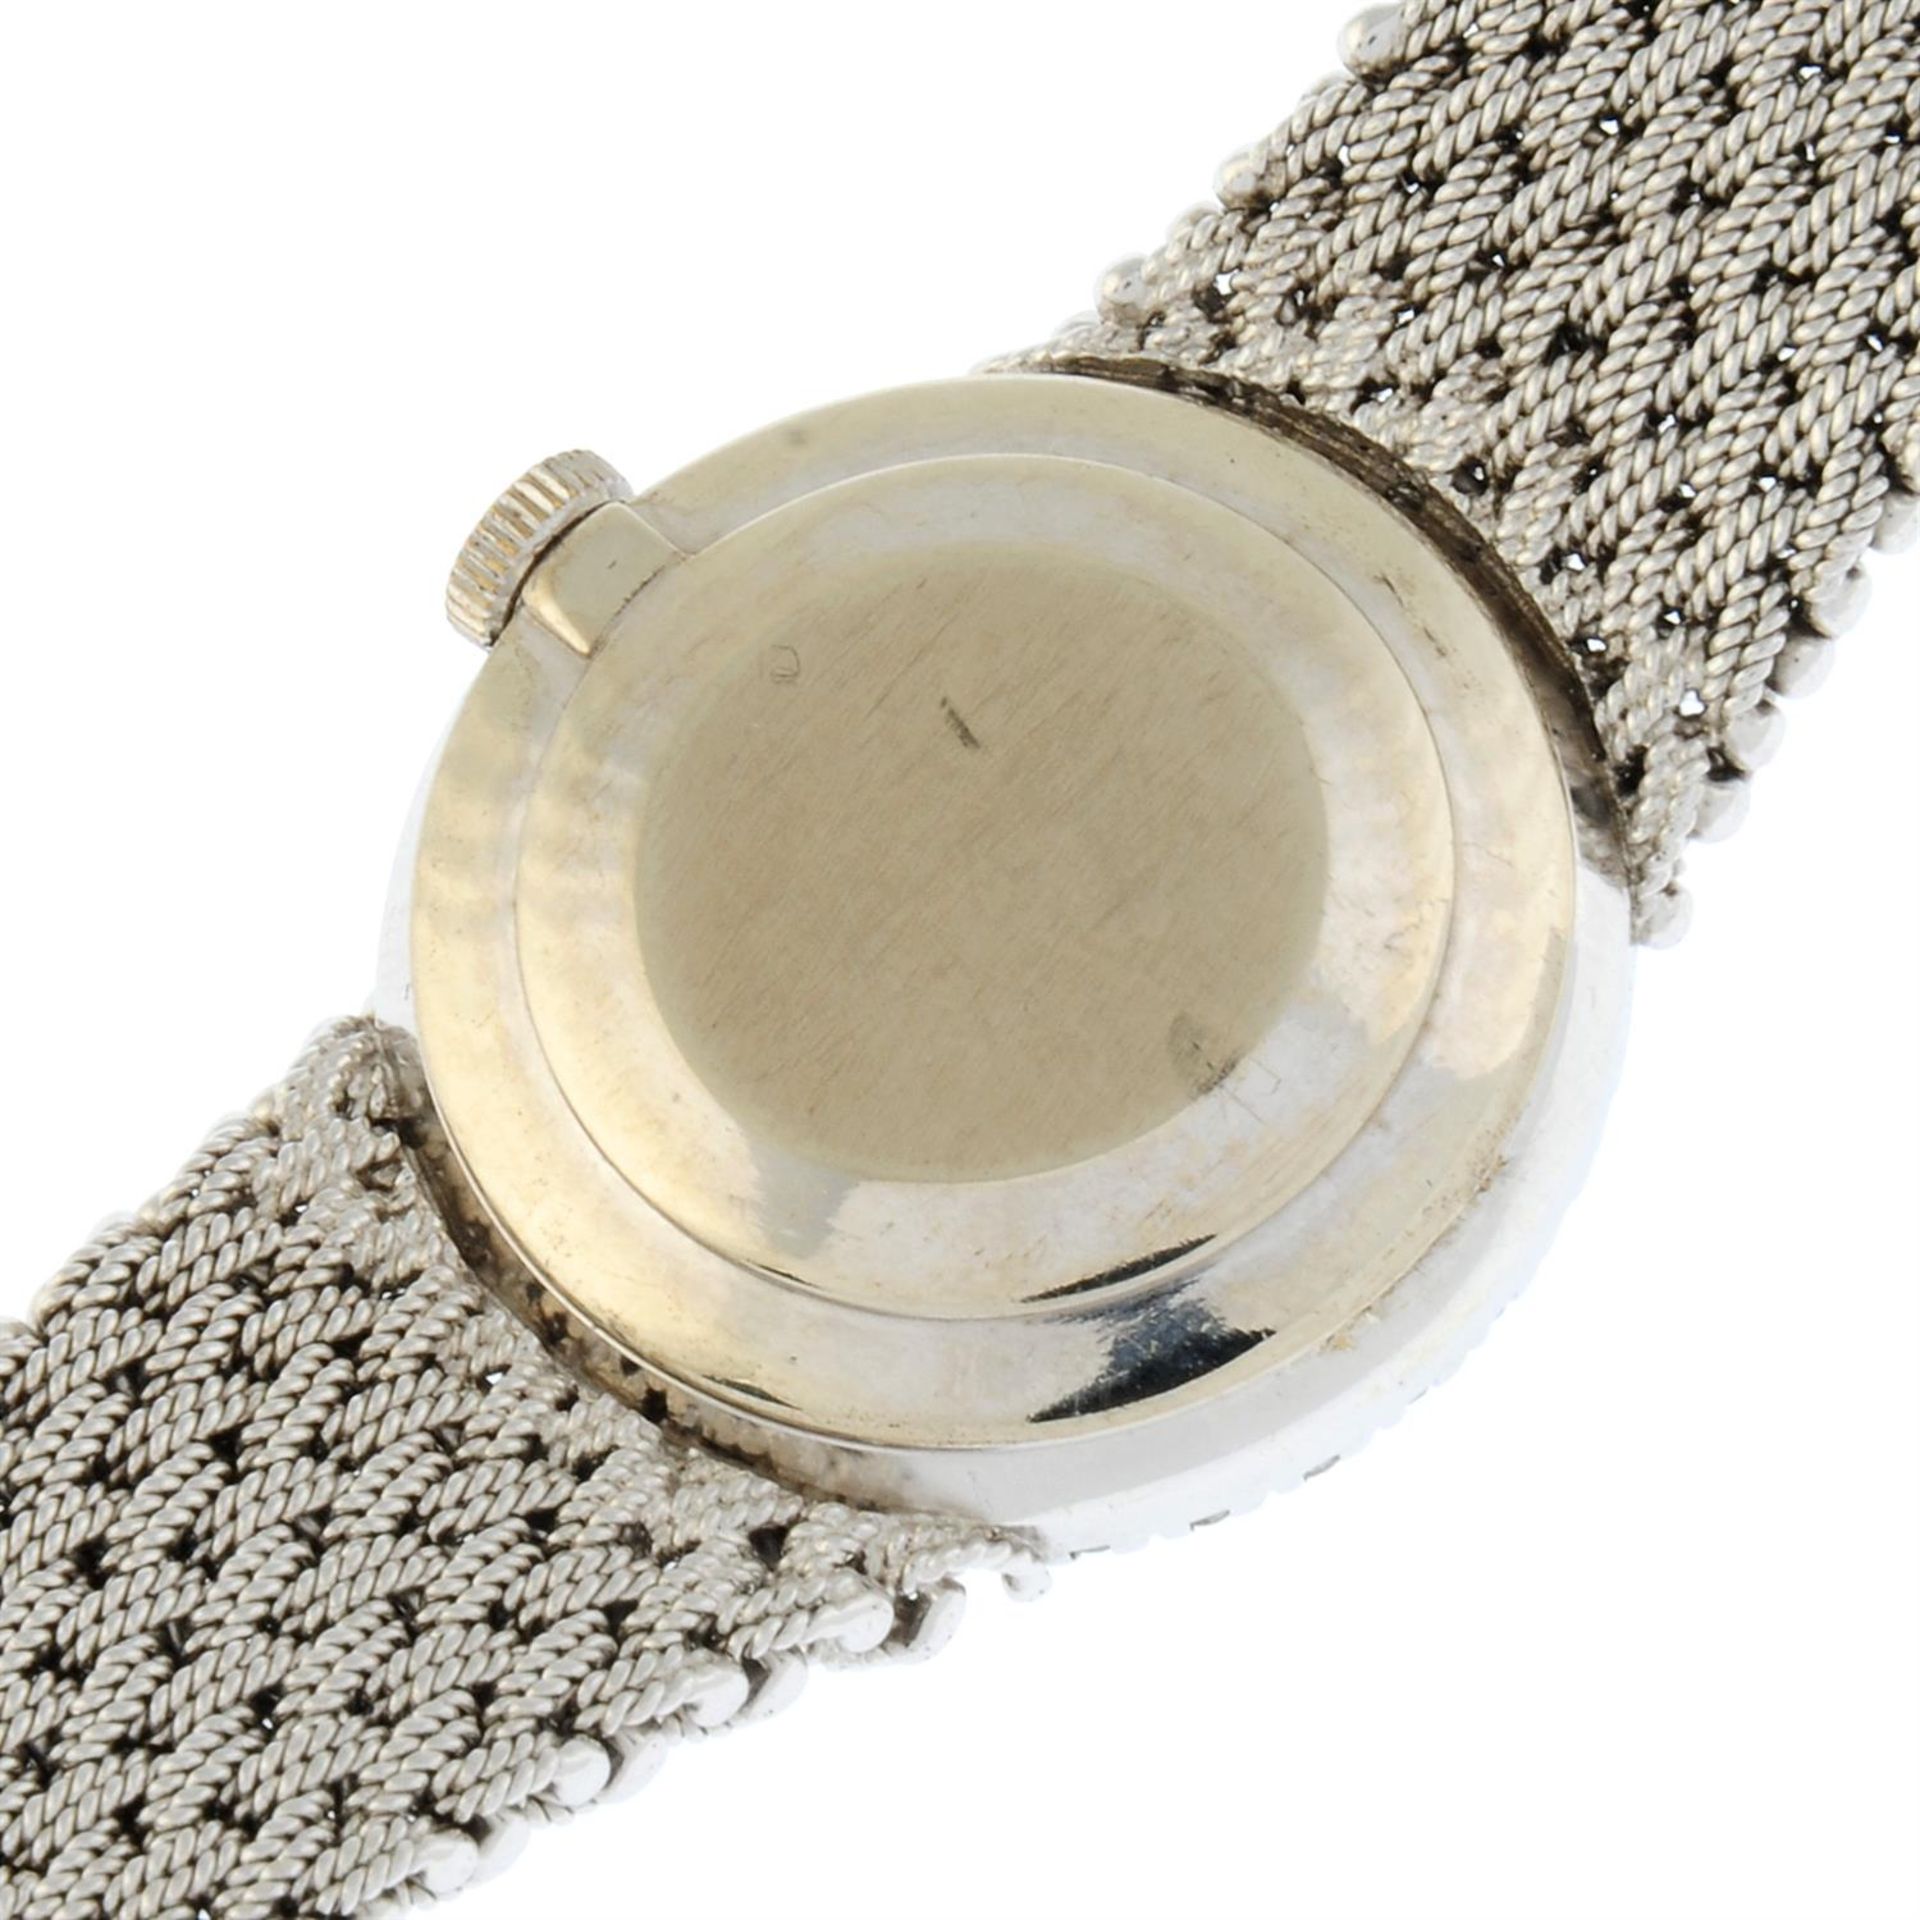 Bueche-Girod - a watch, 24mm. - Image 4 of 6